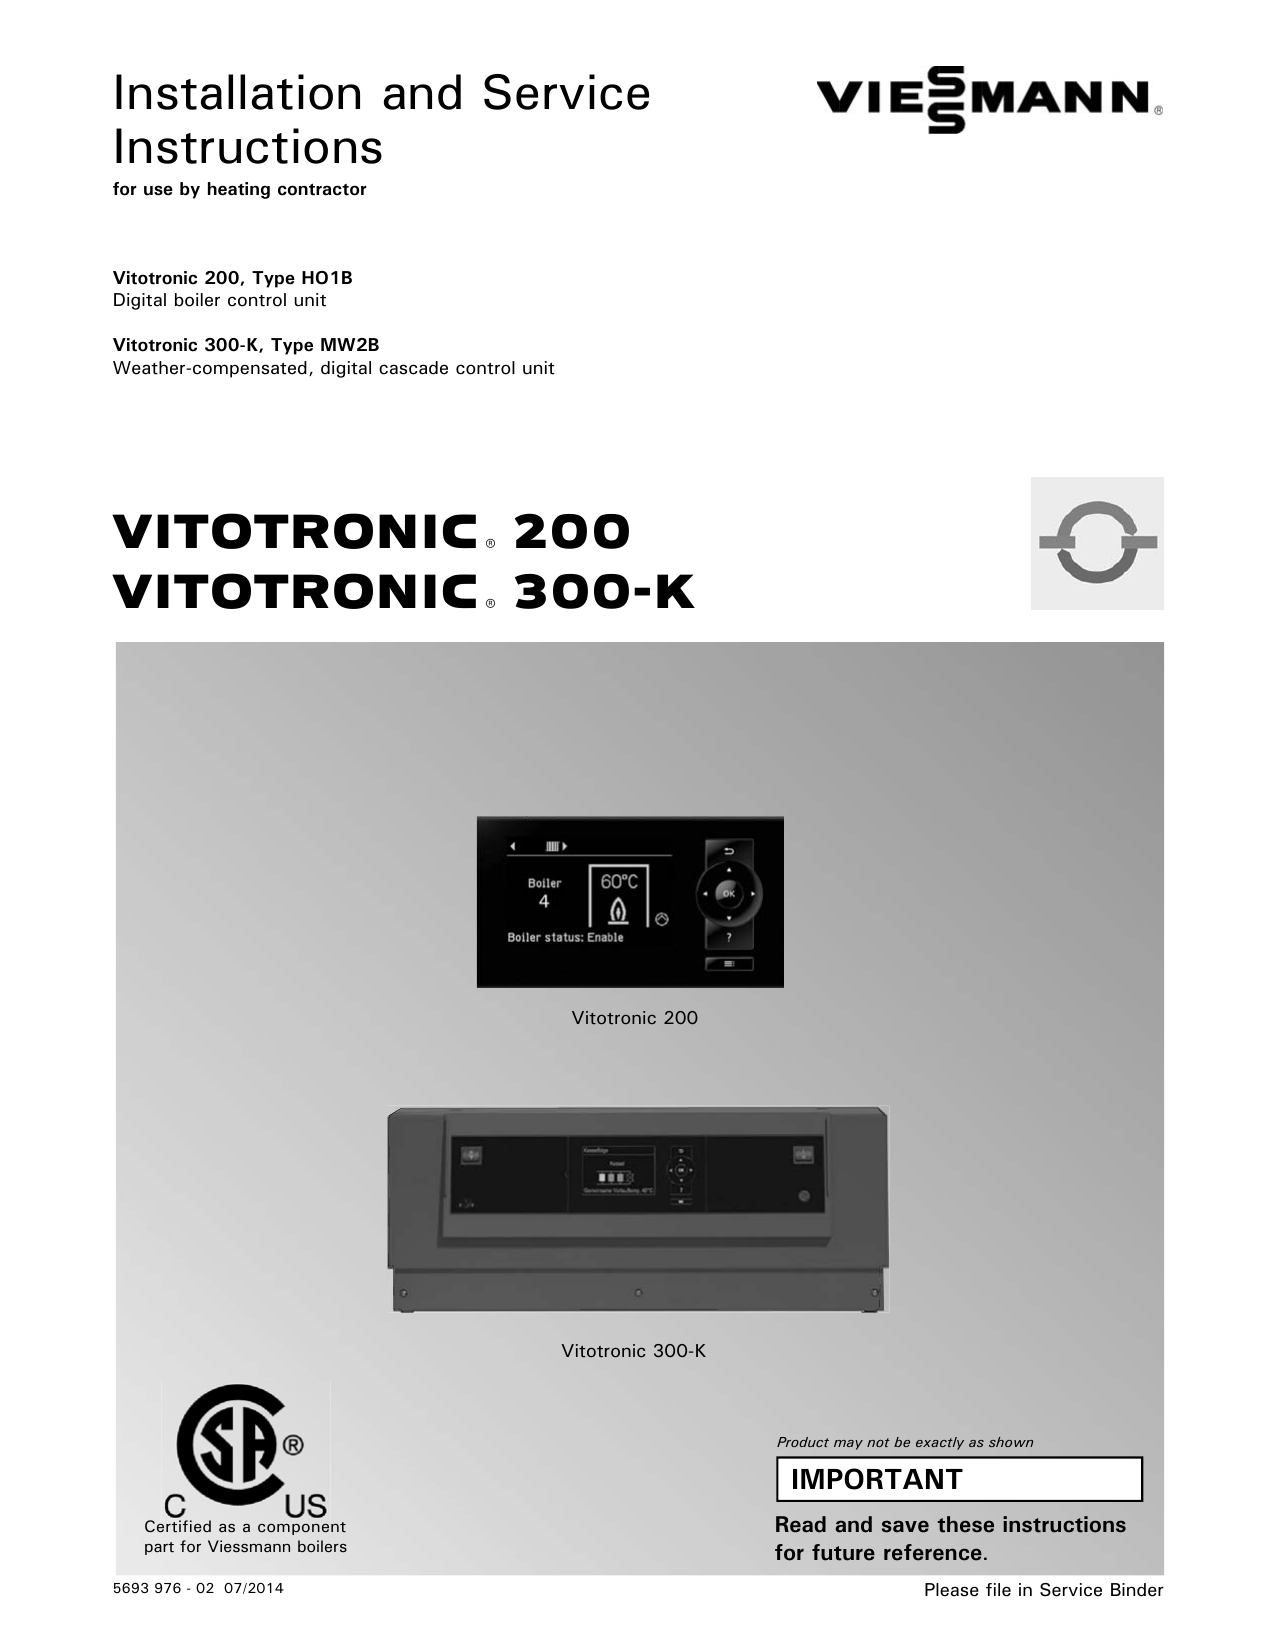 контроллер vitotronic gc1 инструкция | Дзен